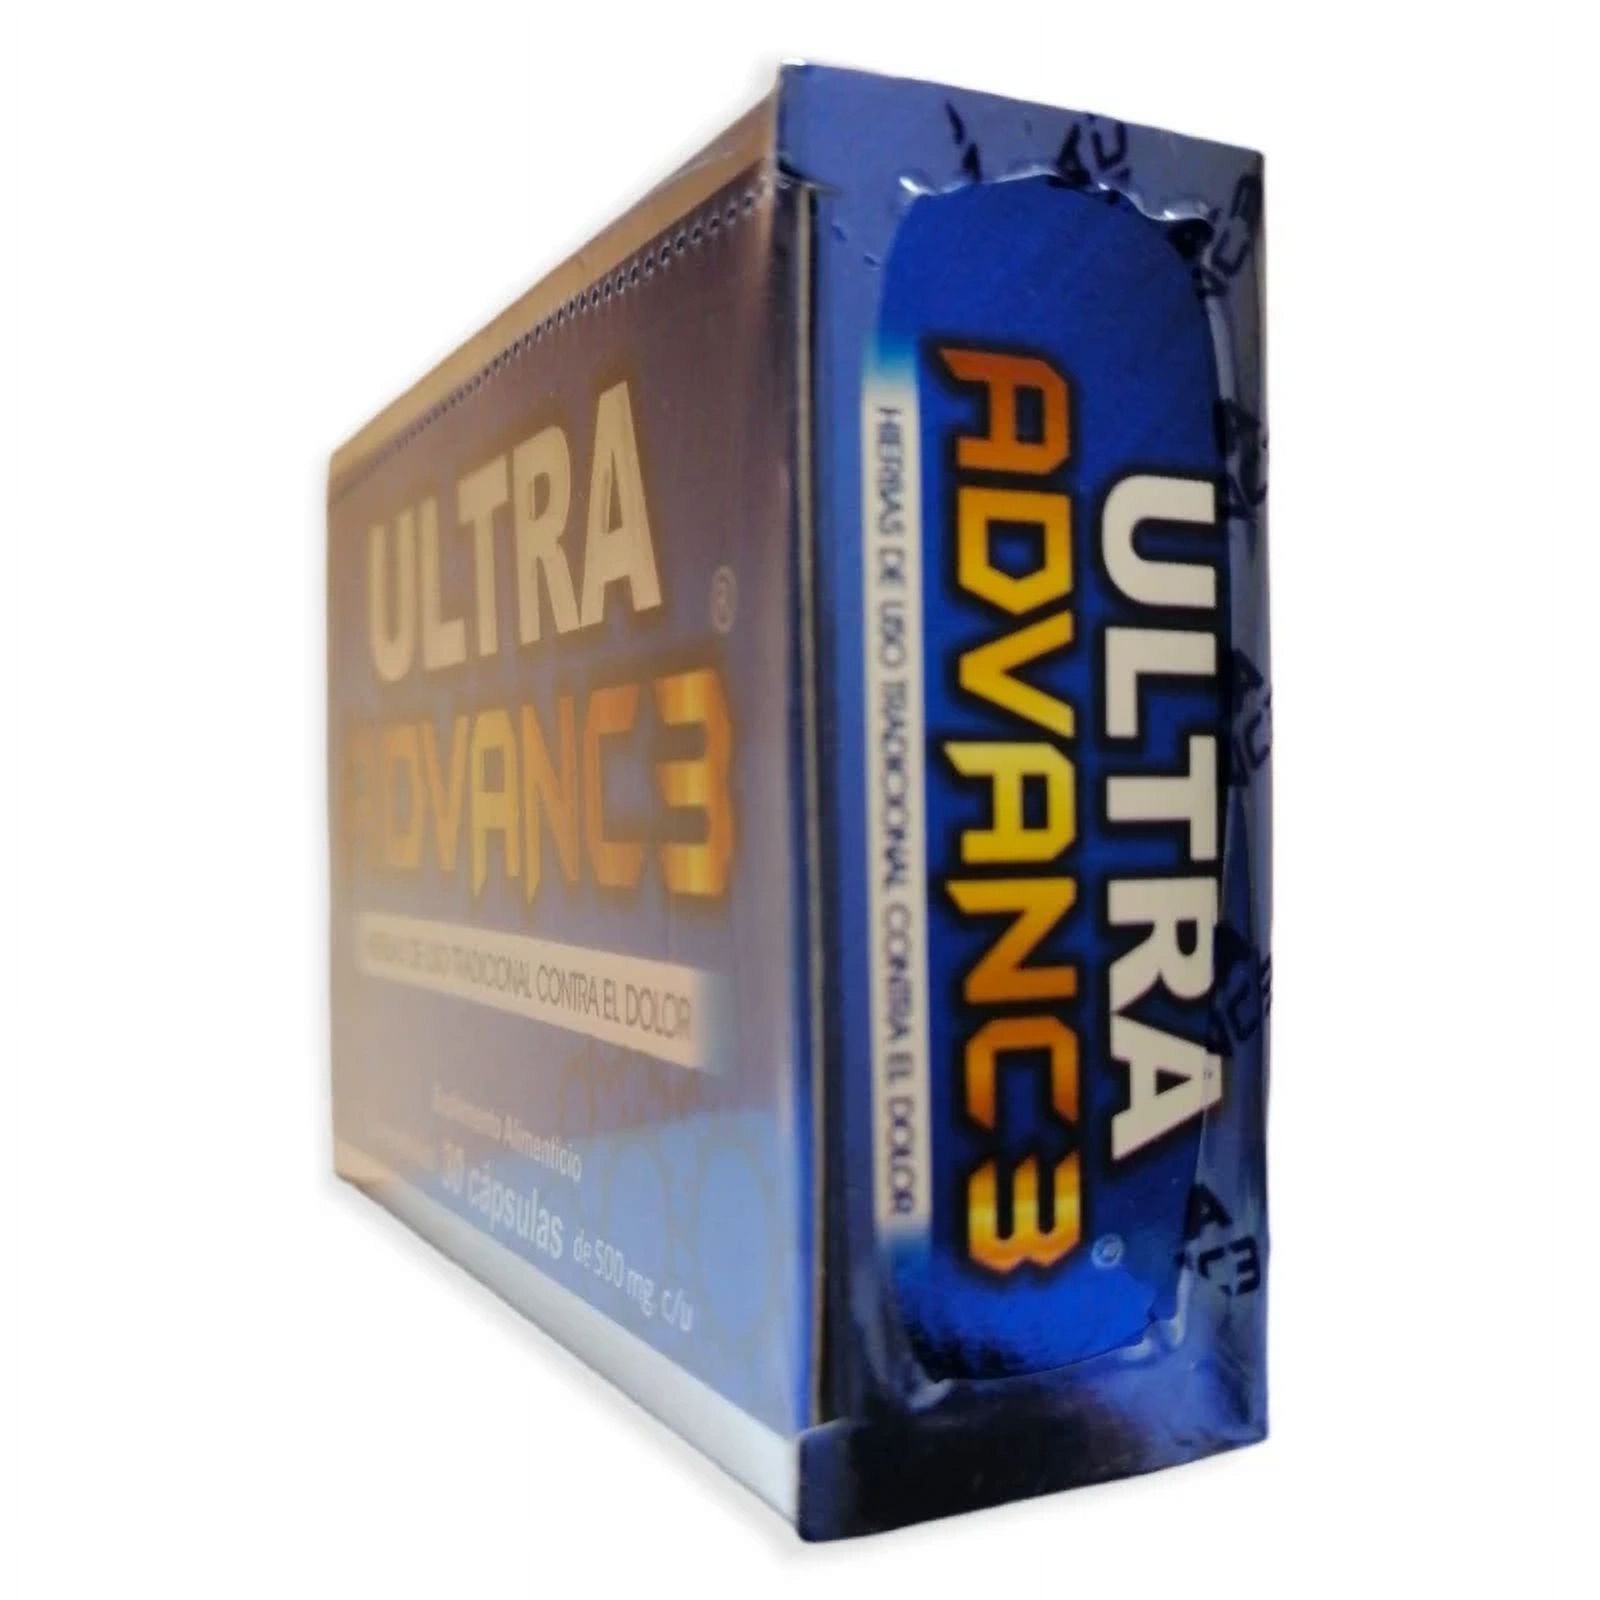 Ultra Advance 3 Ultra Advanc3 (30 Cápsulas de 500mg) - image 4 of 5